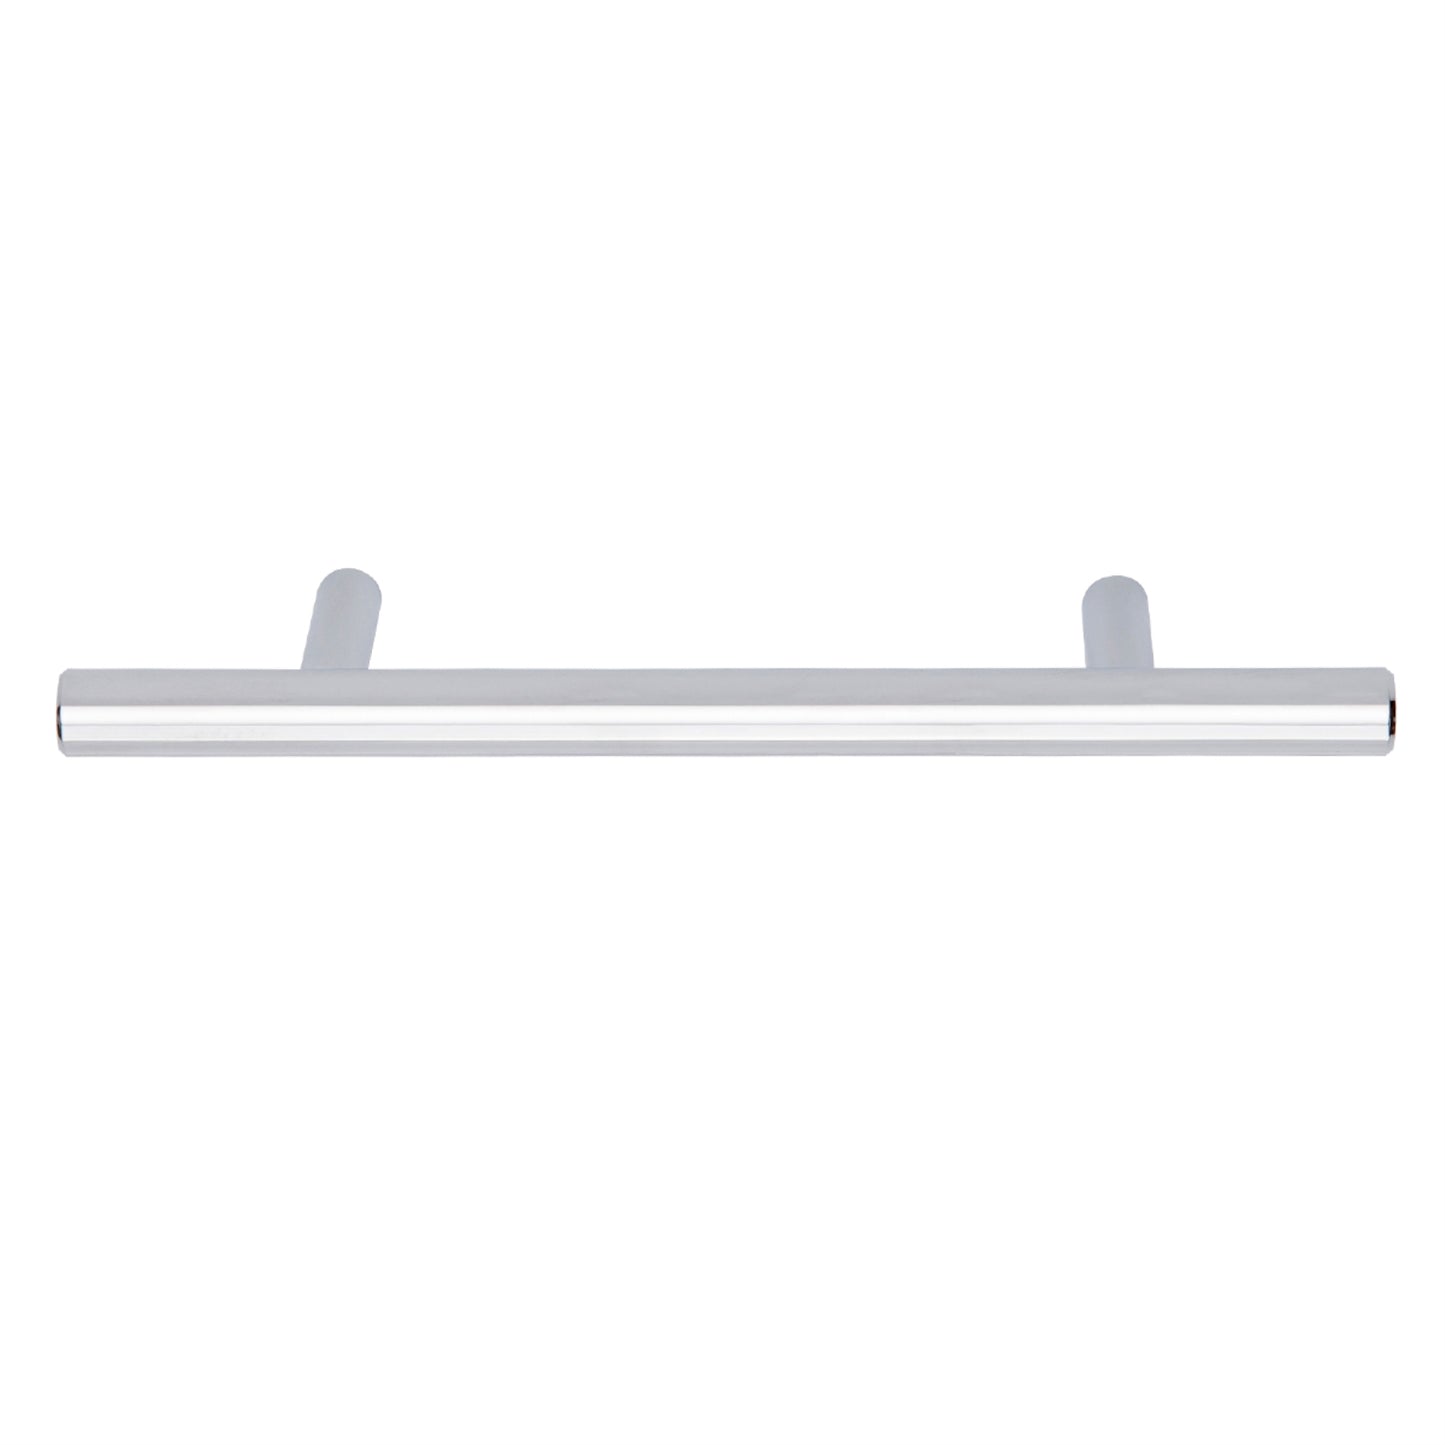 South Main Hardware Euro Bar Cabinet Handle (3/8" Diameter), 5.88" Length (3.5" Hole Center), 10-pack